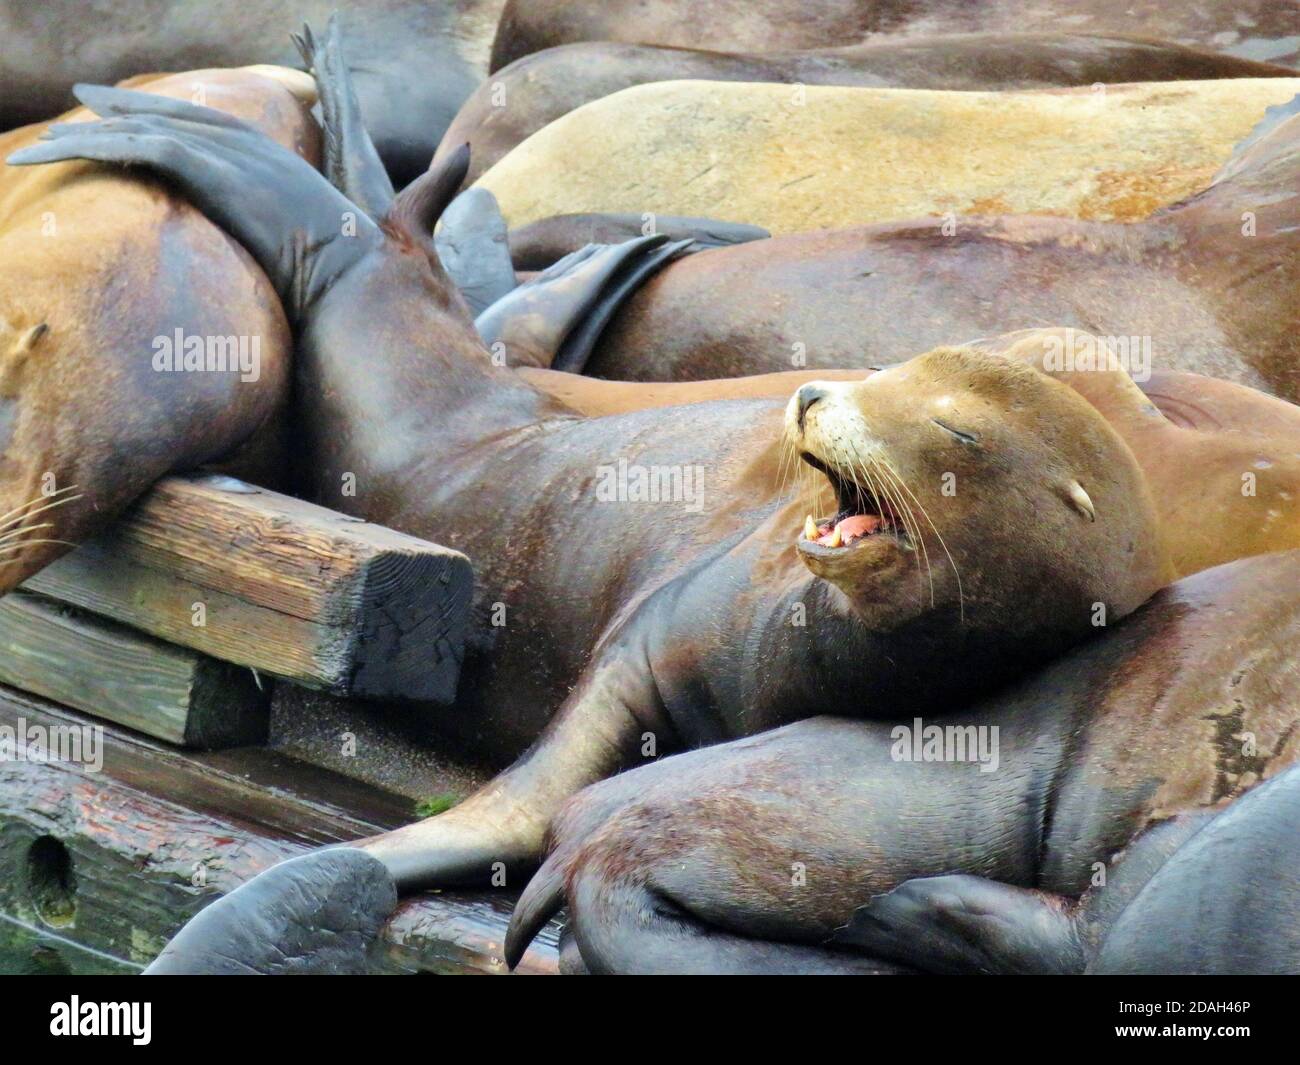 Sea lions lying on the dock in Astoria, Oregon Stock Photo